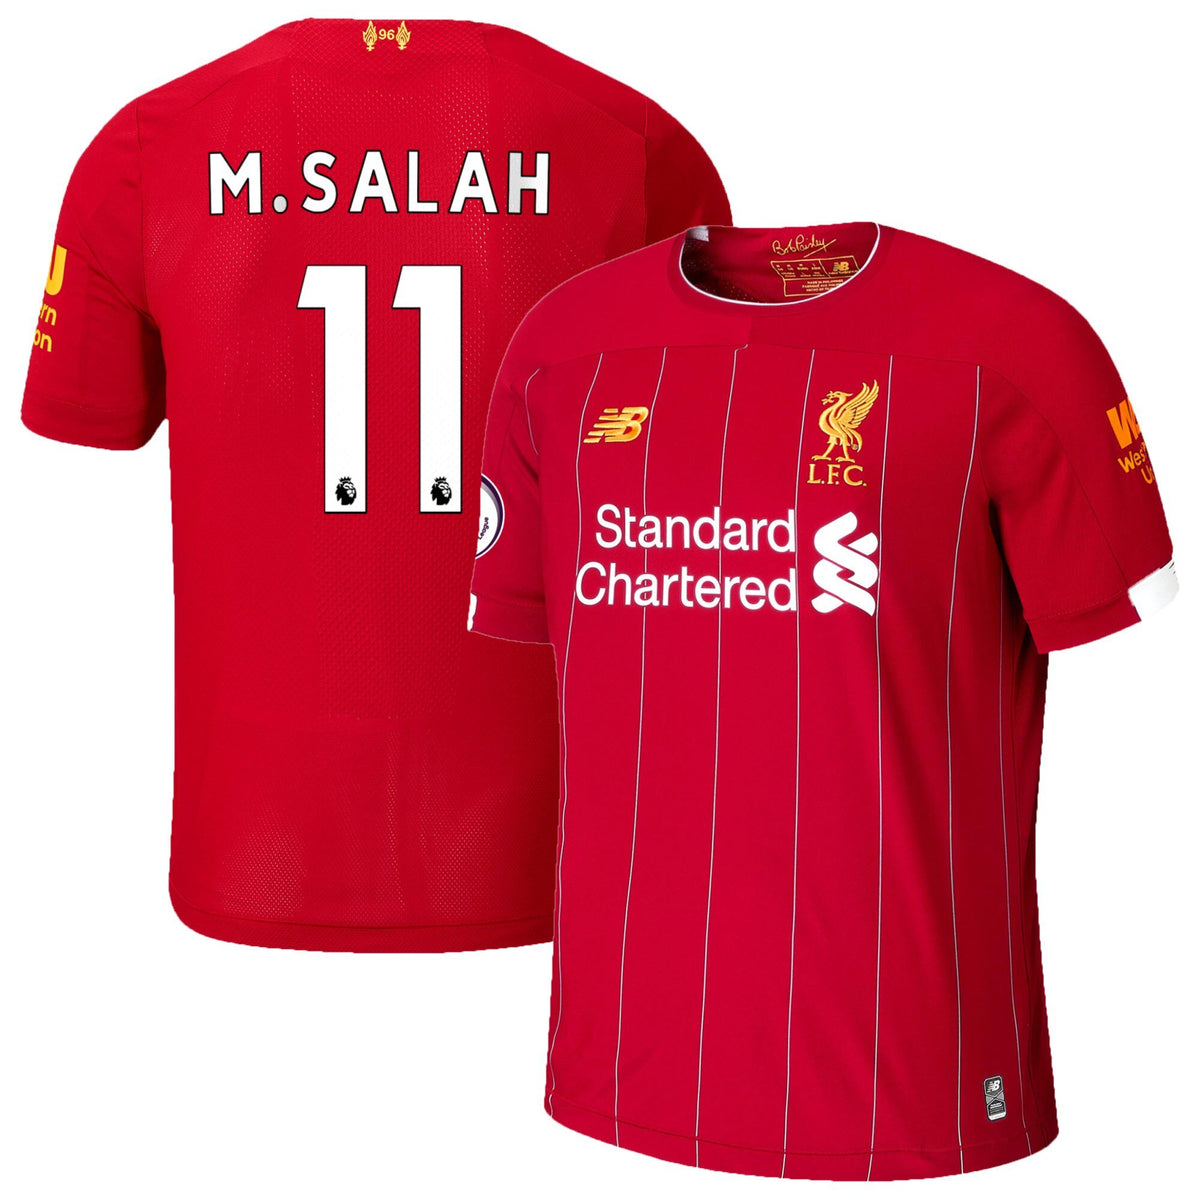 Mohamed Salah Liverpool 19/20 Home 